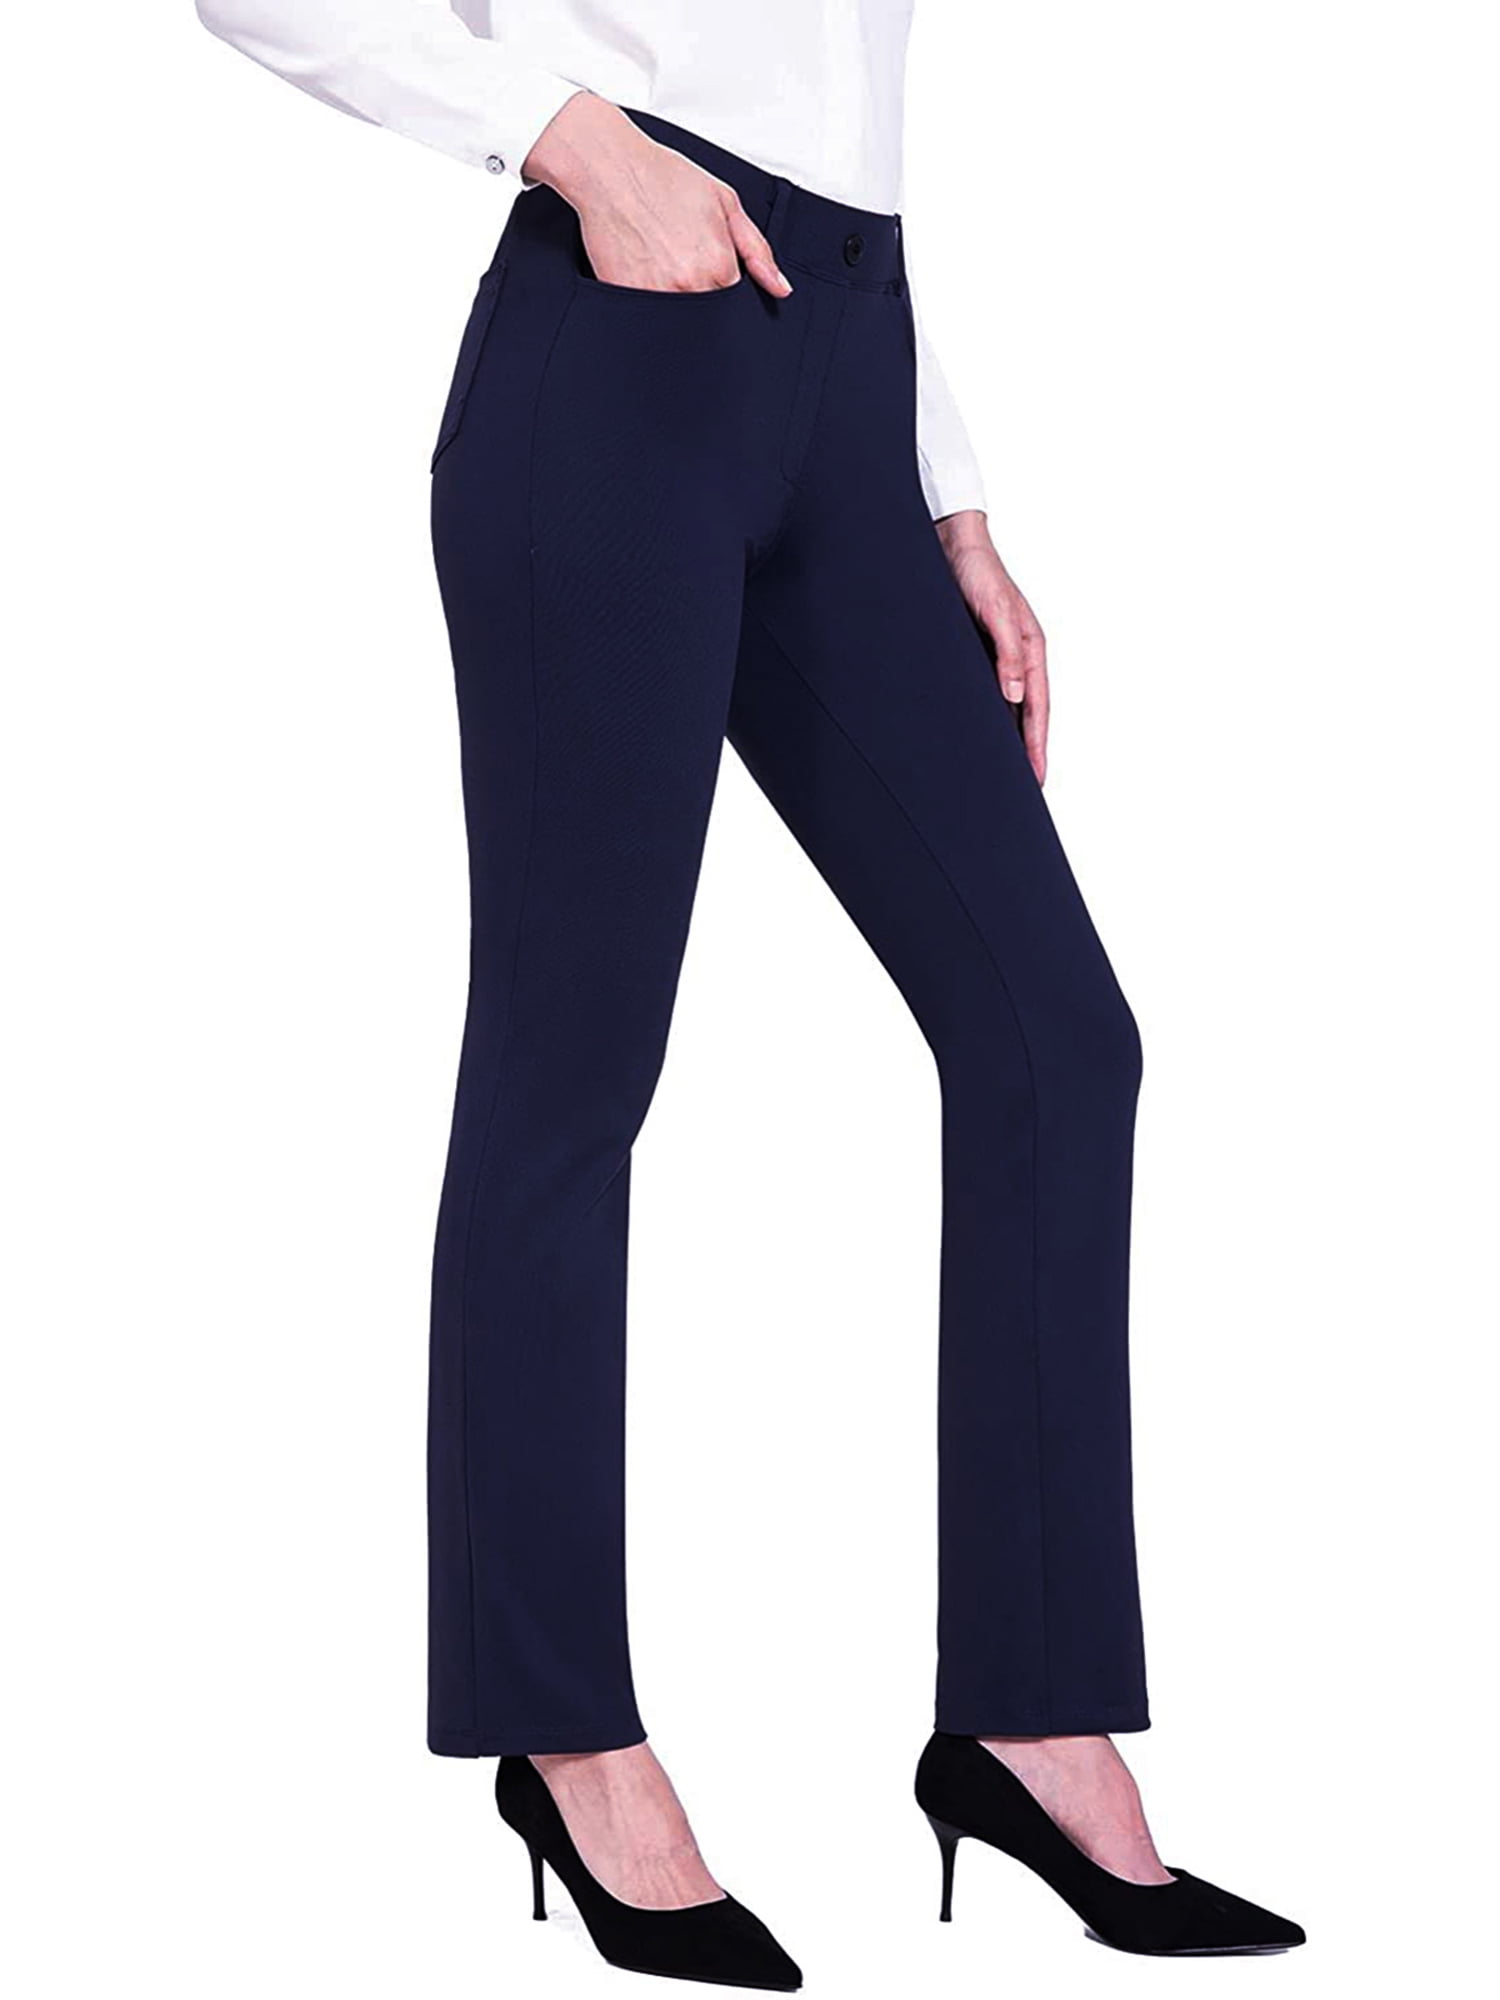 xkwyshop Women Yoga Dress Pants Stretchy Work Pants Straightleg Office  Slacks with Pockets for Business Casual Petite Navy Blue